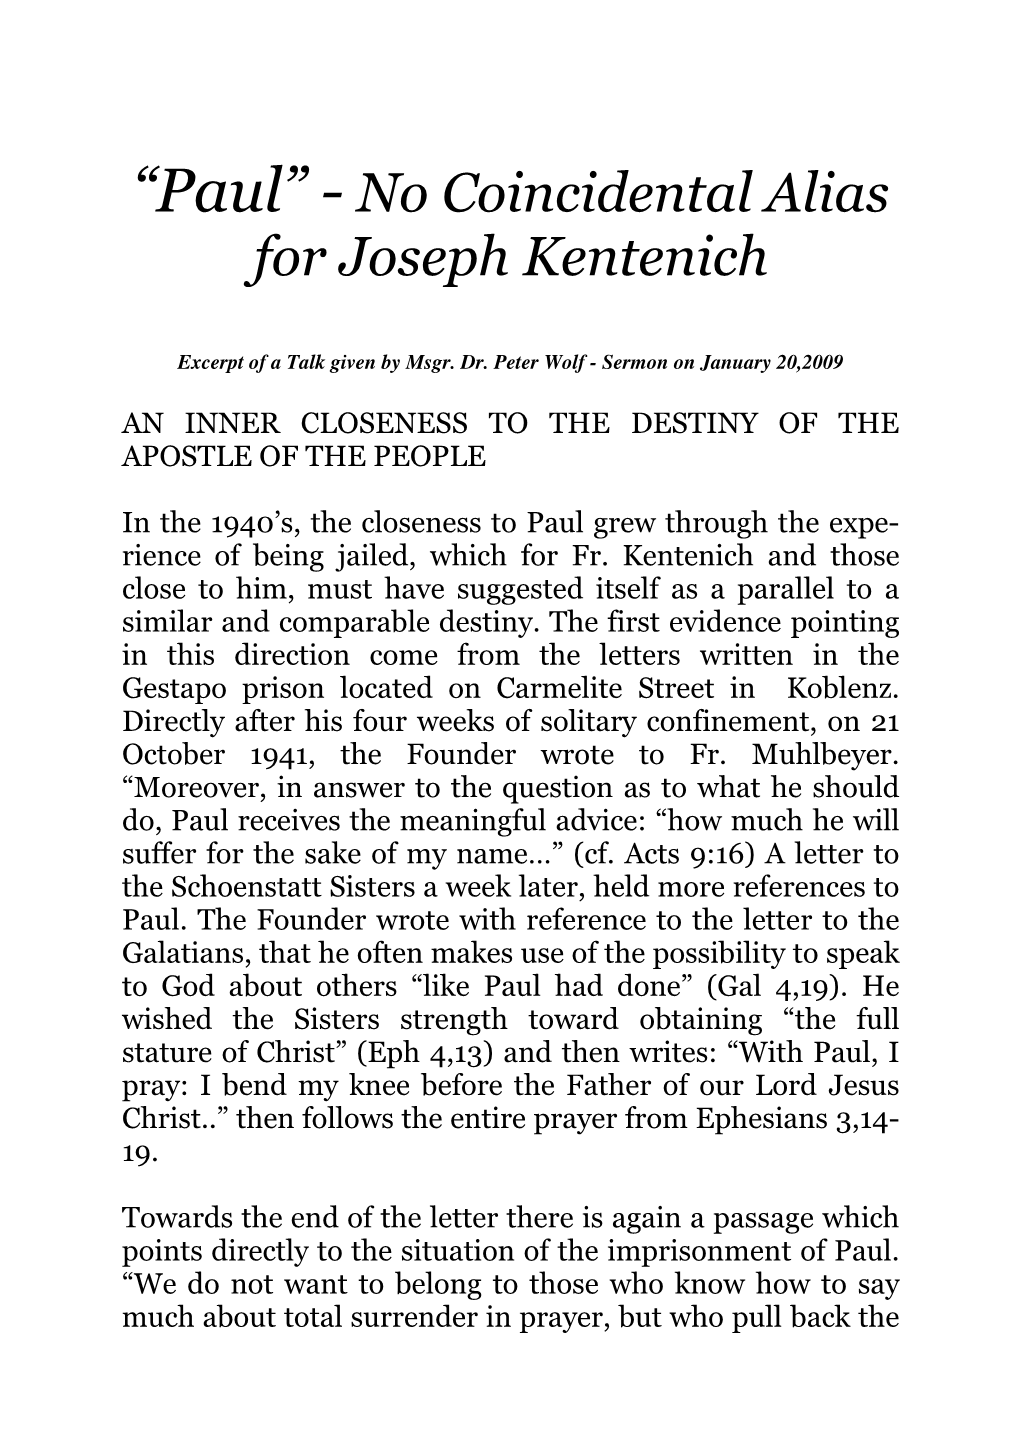 “Paul” - No Coincidental Alias for Joseph Kentenich